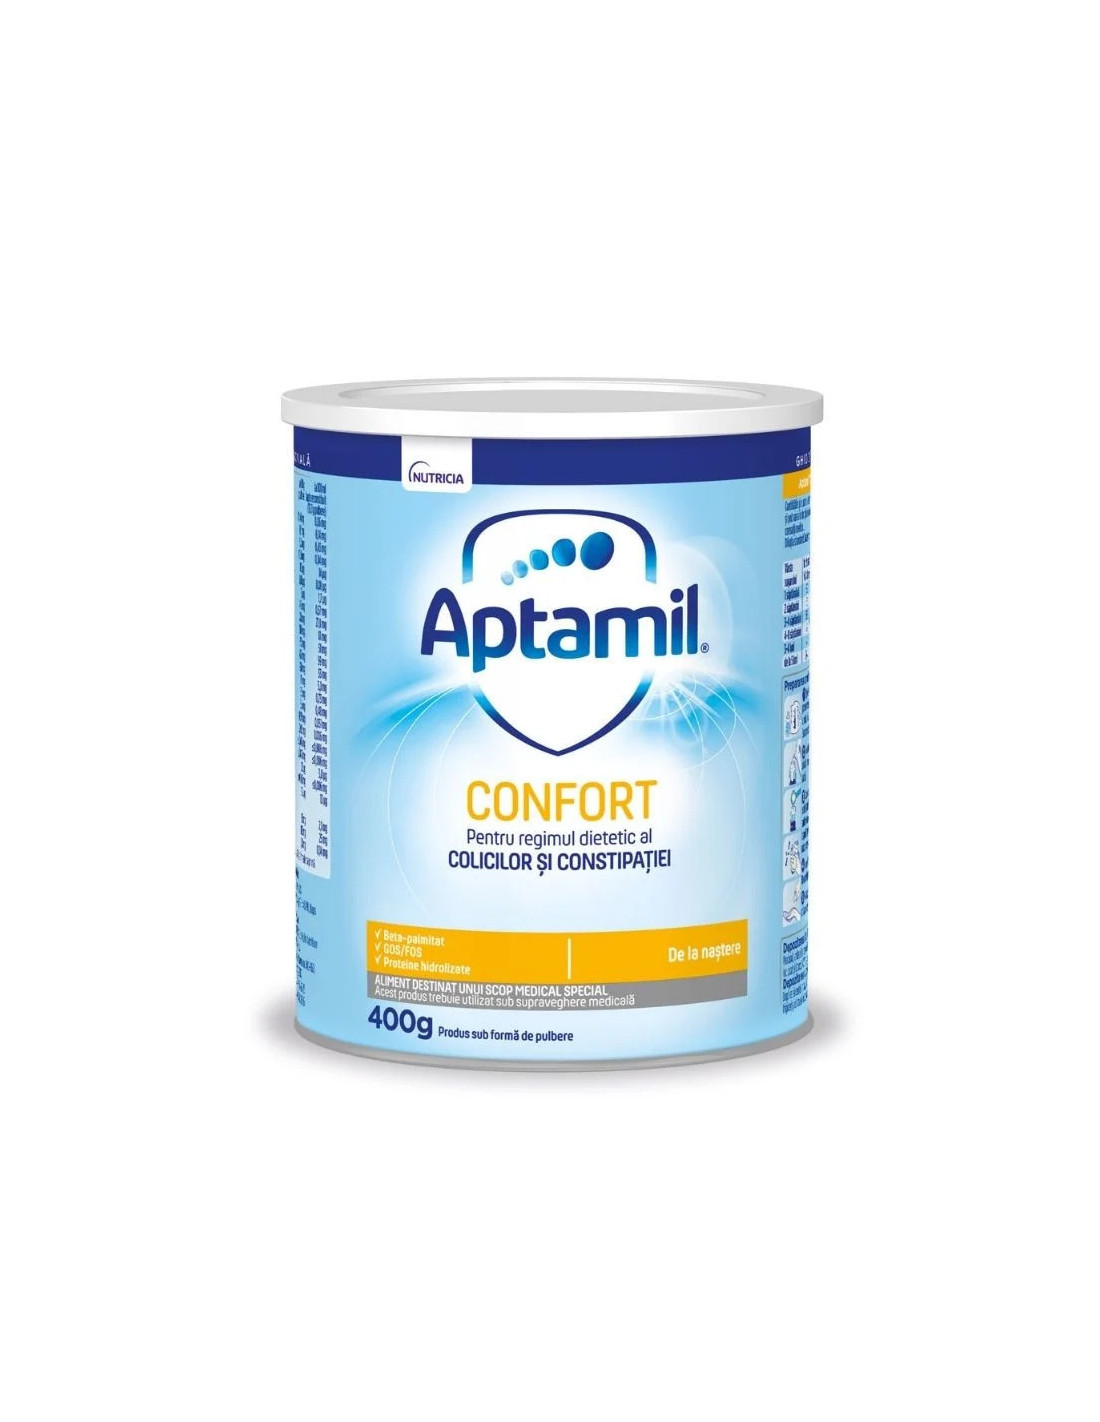 Aptamil Confort, 400g - FORMULE-LAPTE - APTAMIL